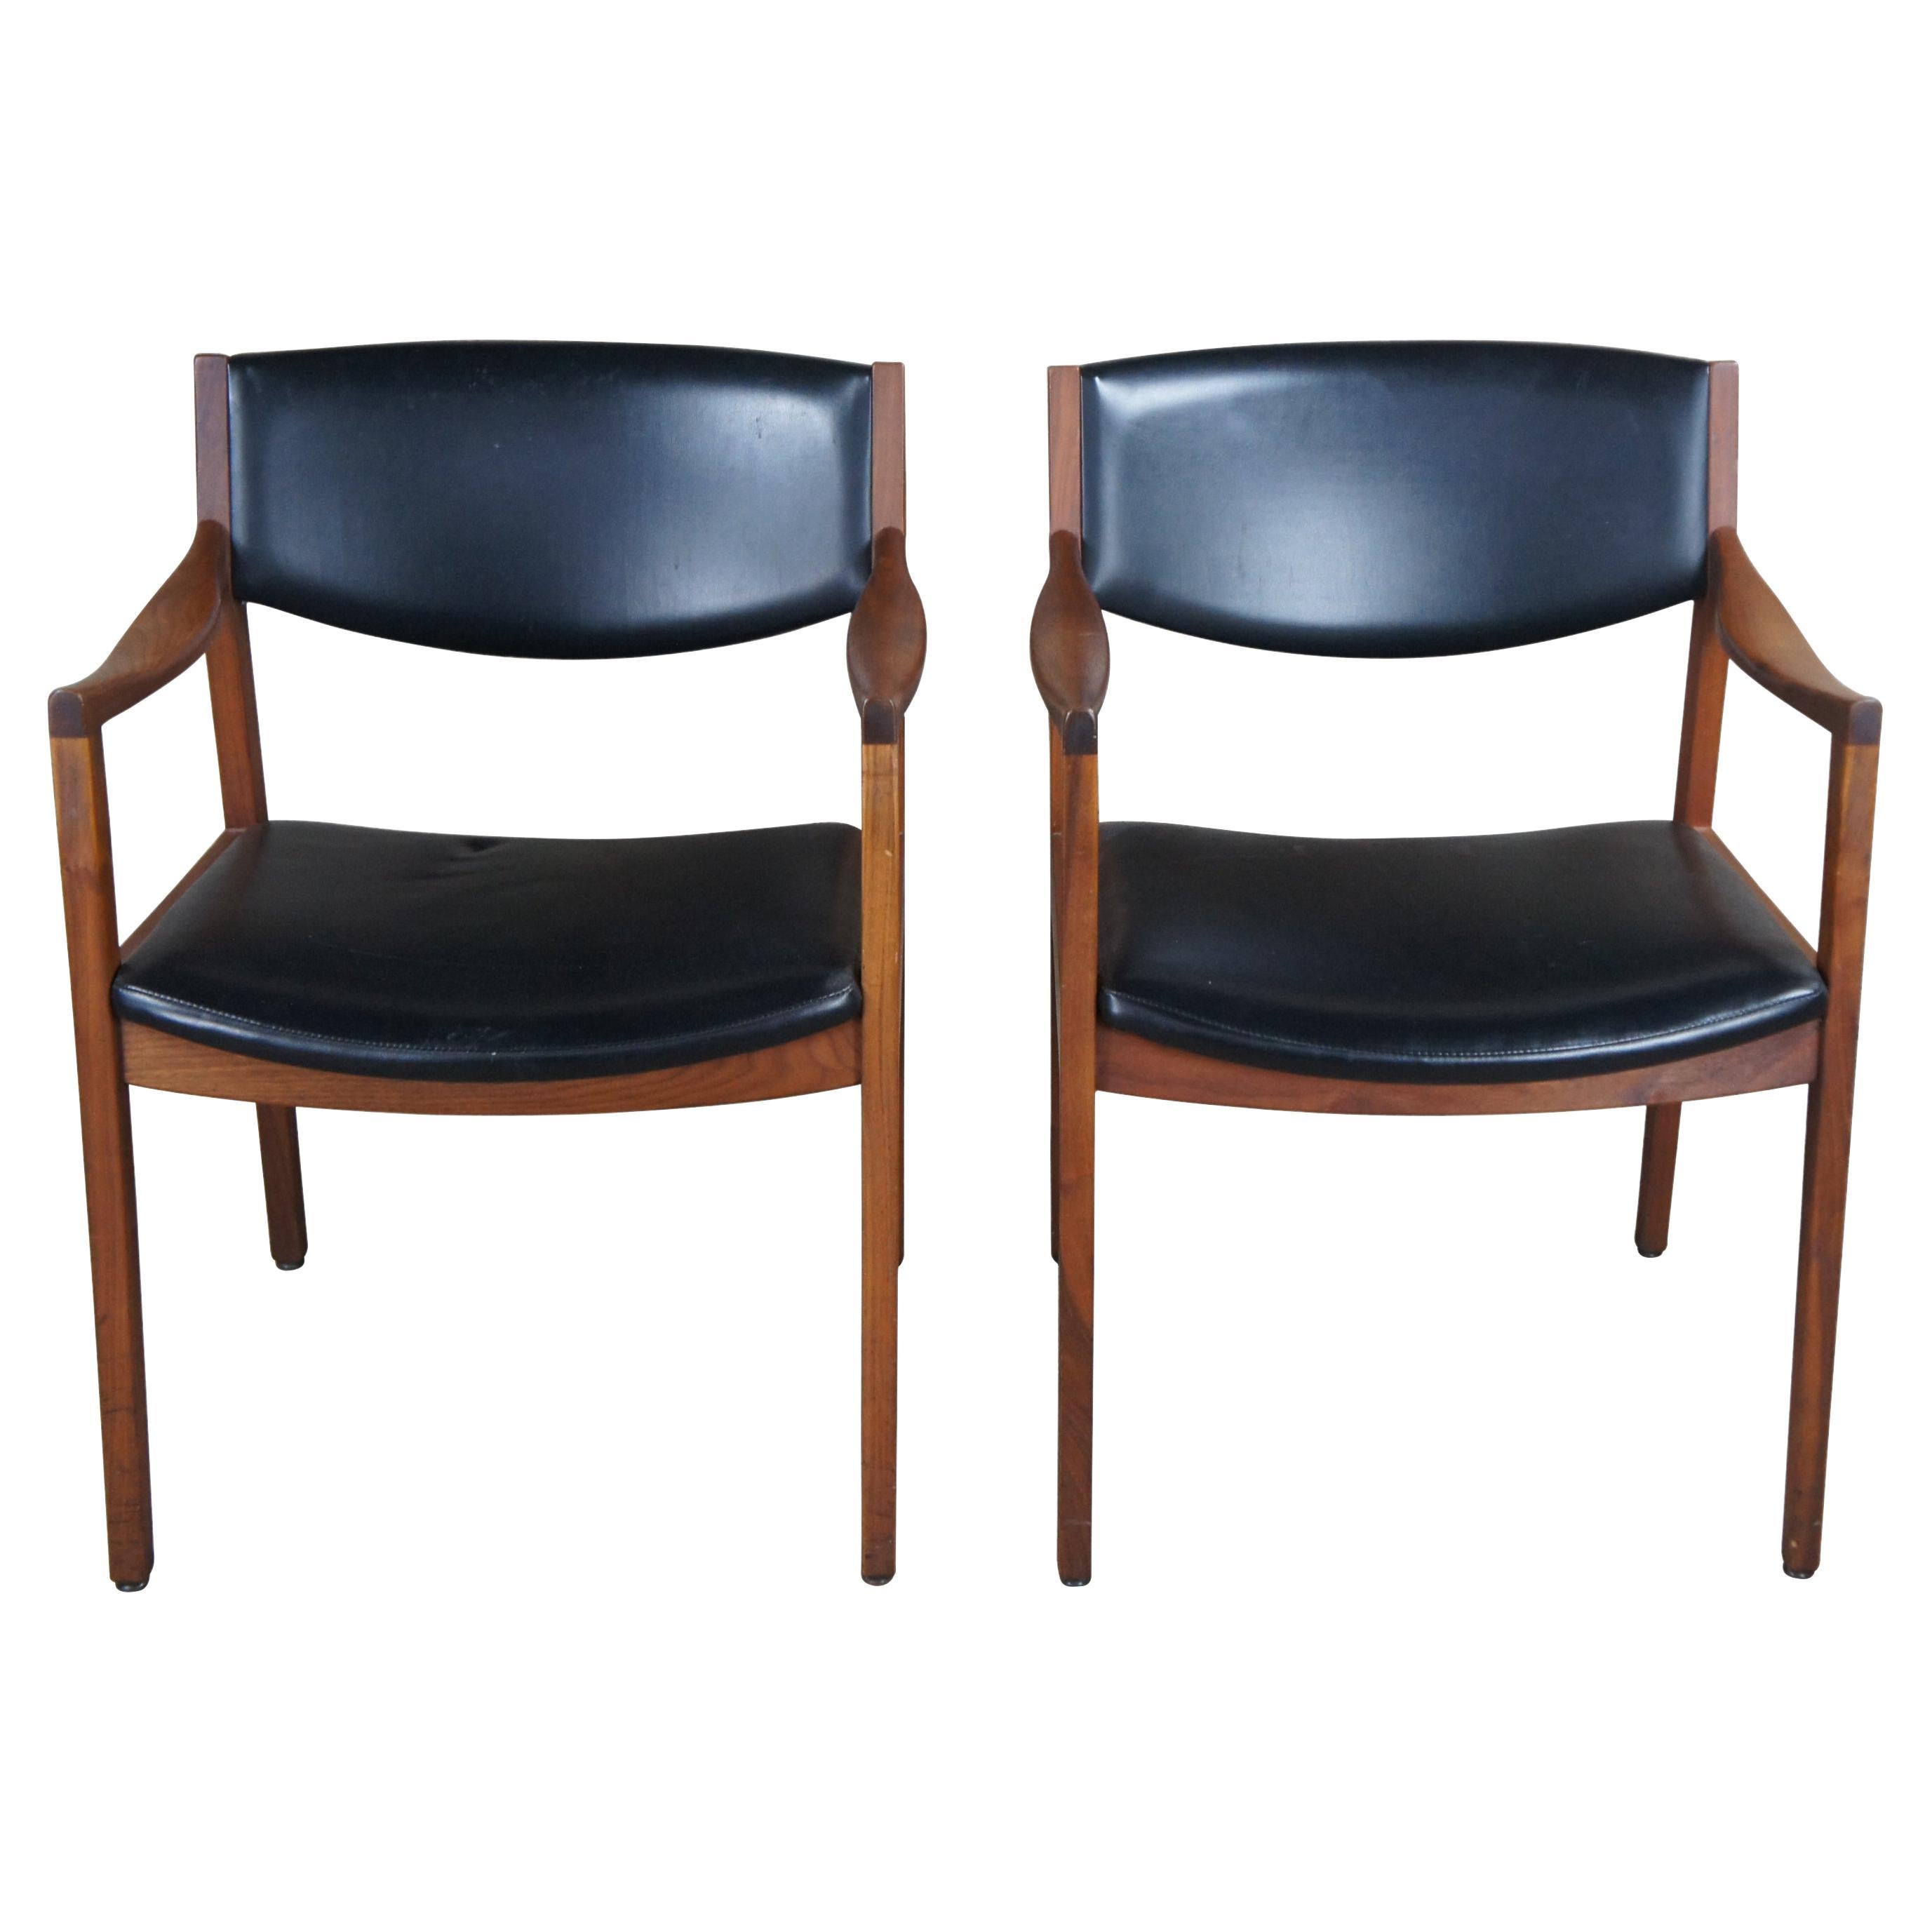 2 Gunlocke After Risom Mid Century Modern Danish Walnut & Leather Arms Chairs  For Sale